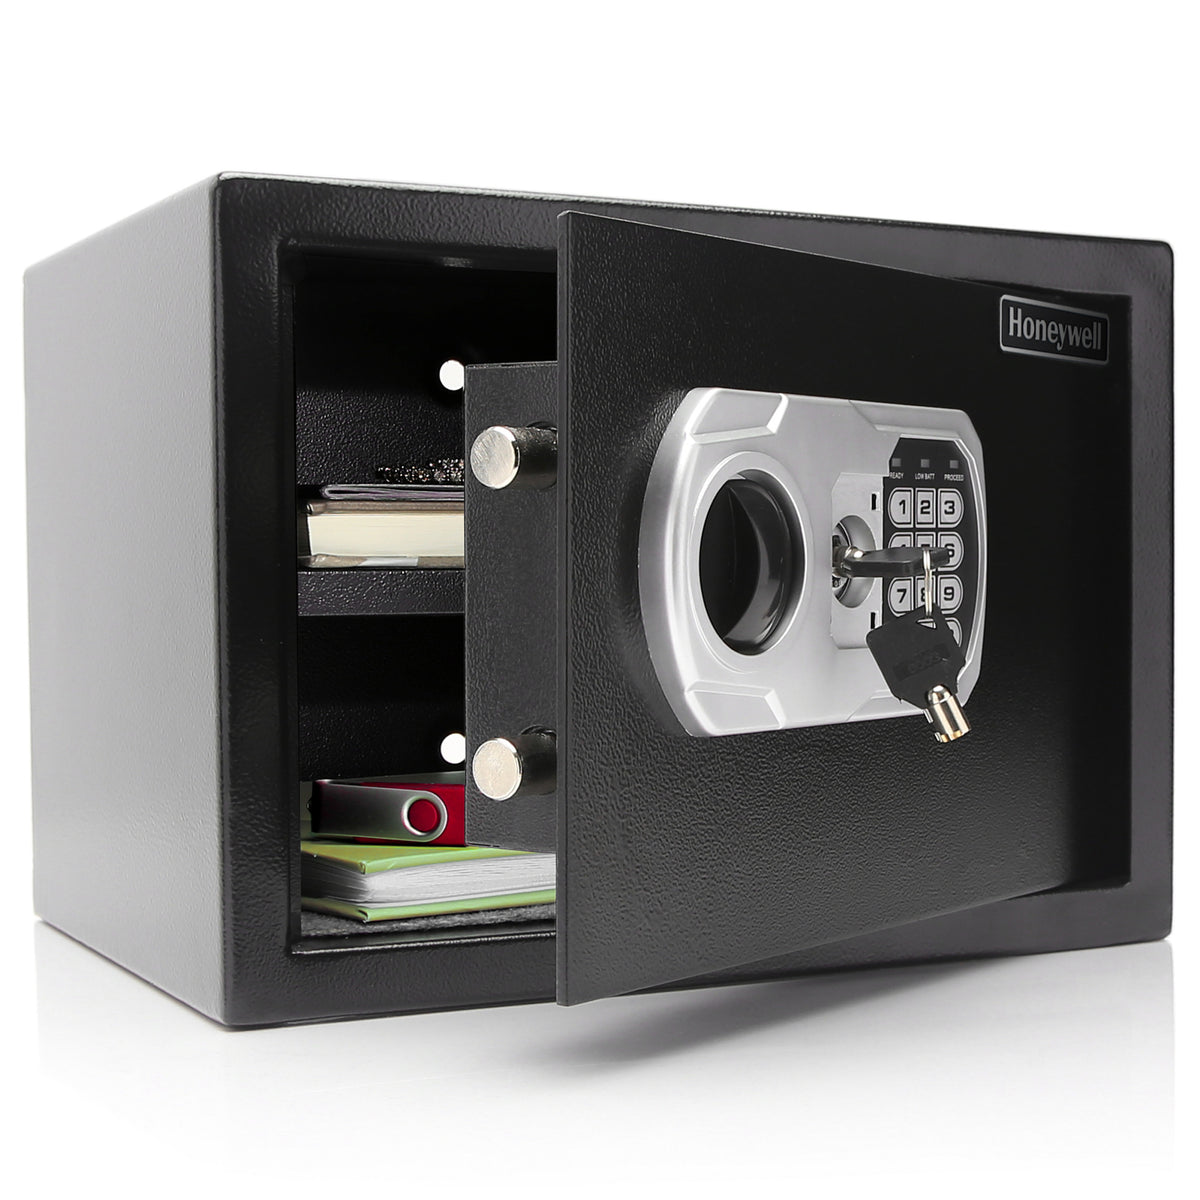 Honeywell 5110 Small Steel Security Safe with Digital Lock Door Open with Key